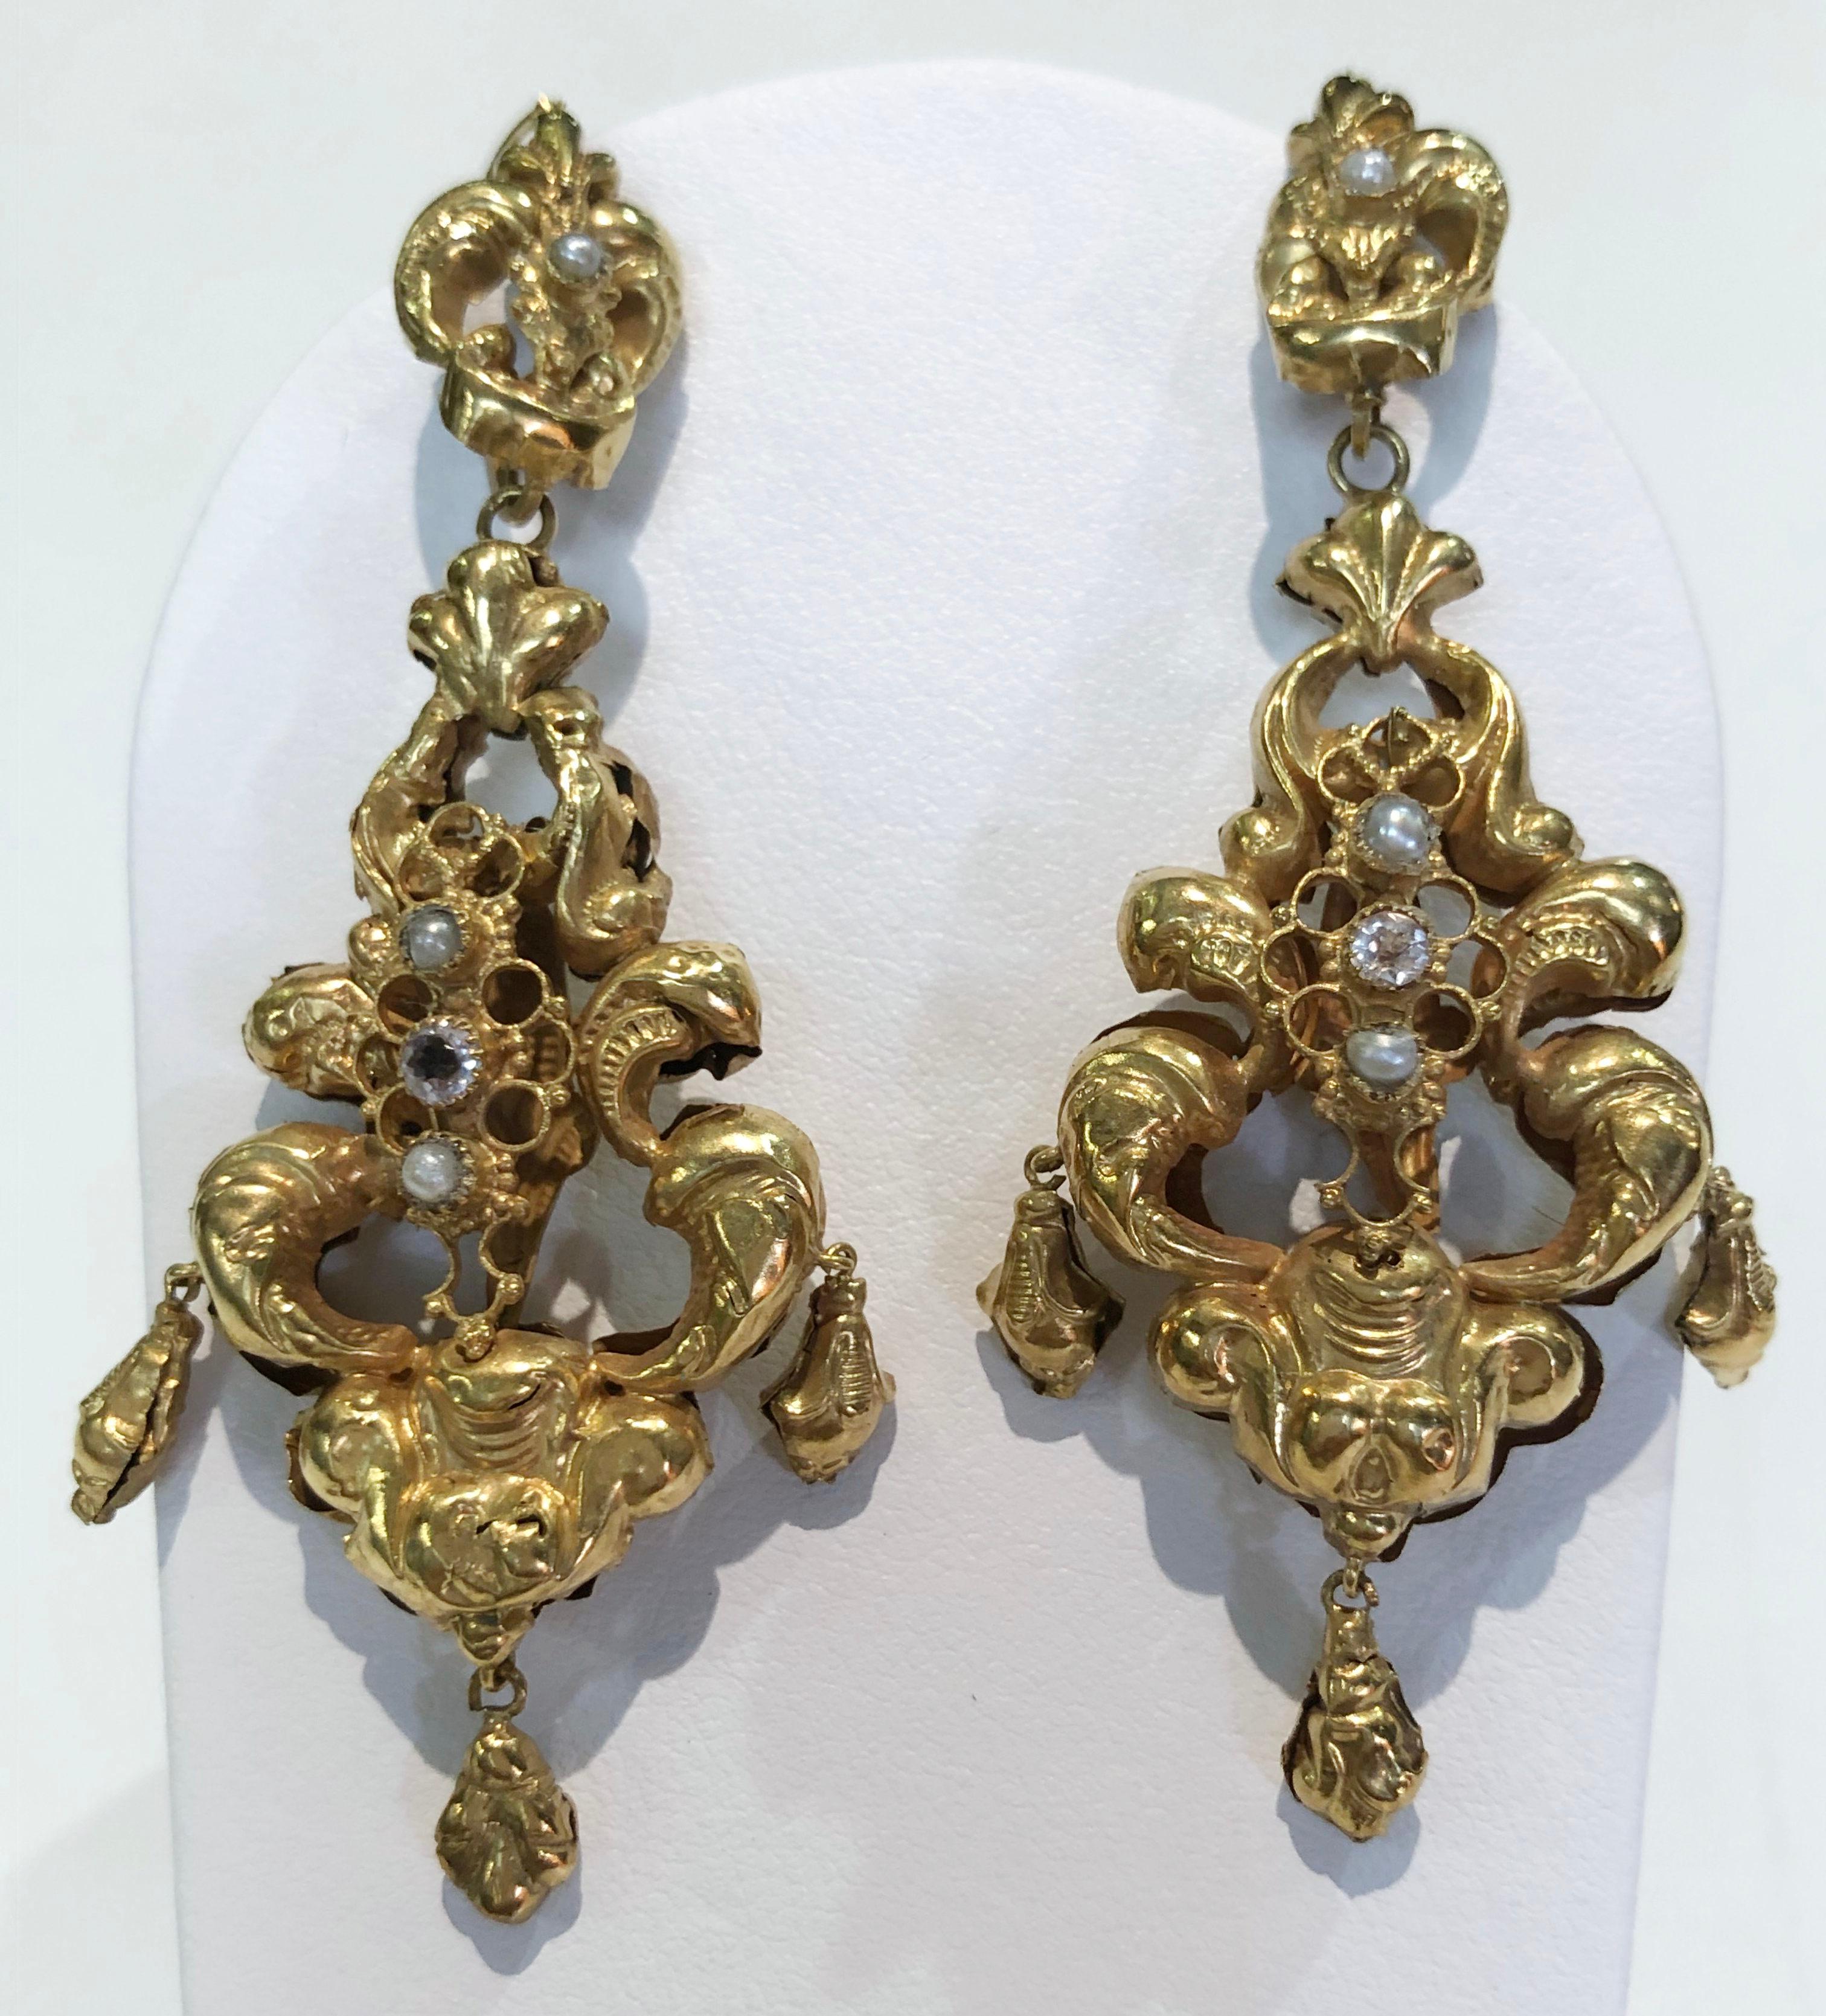 Paar antike, handgeprägte Goldohrringe, Italien um 1700
Länge 7,5 cm